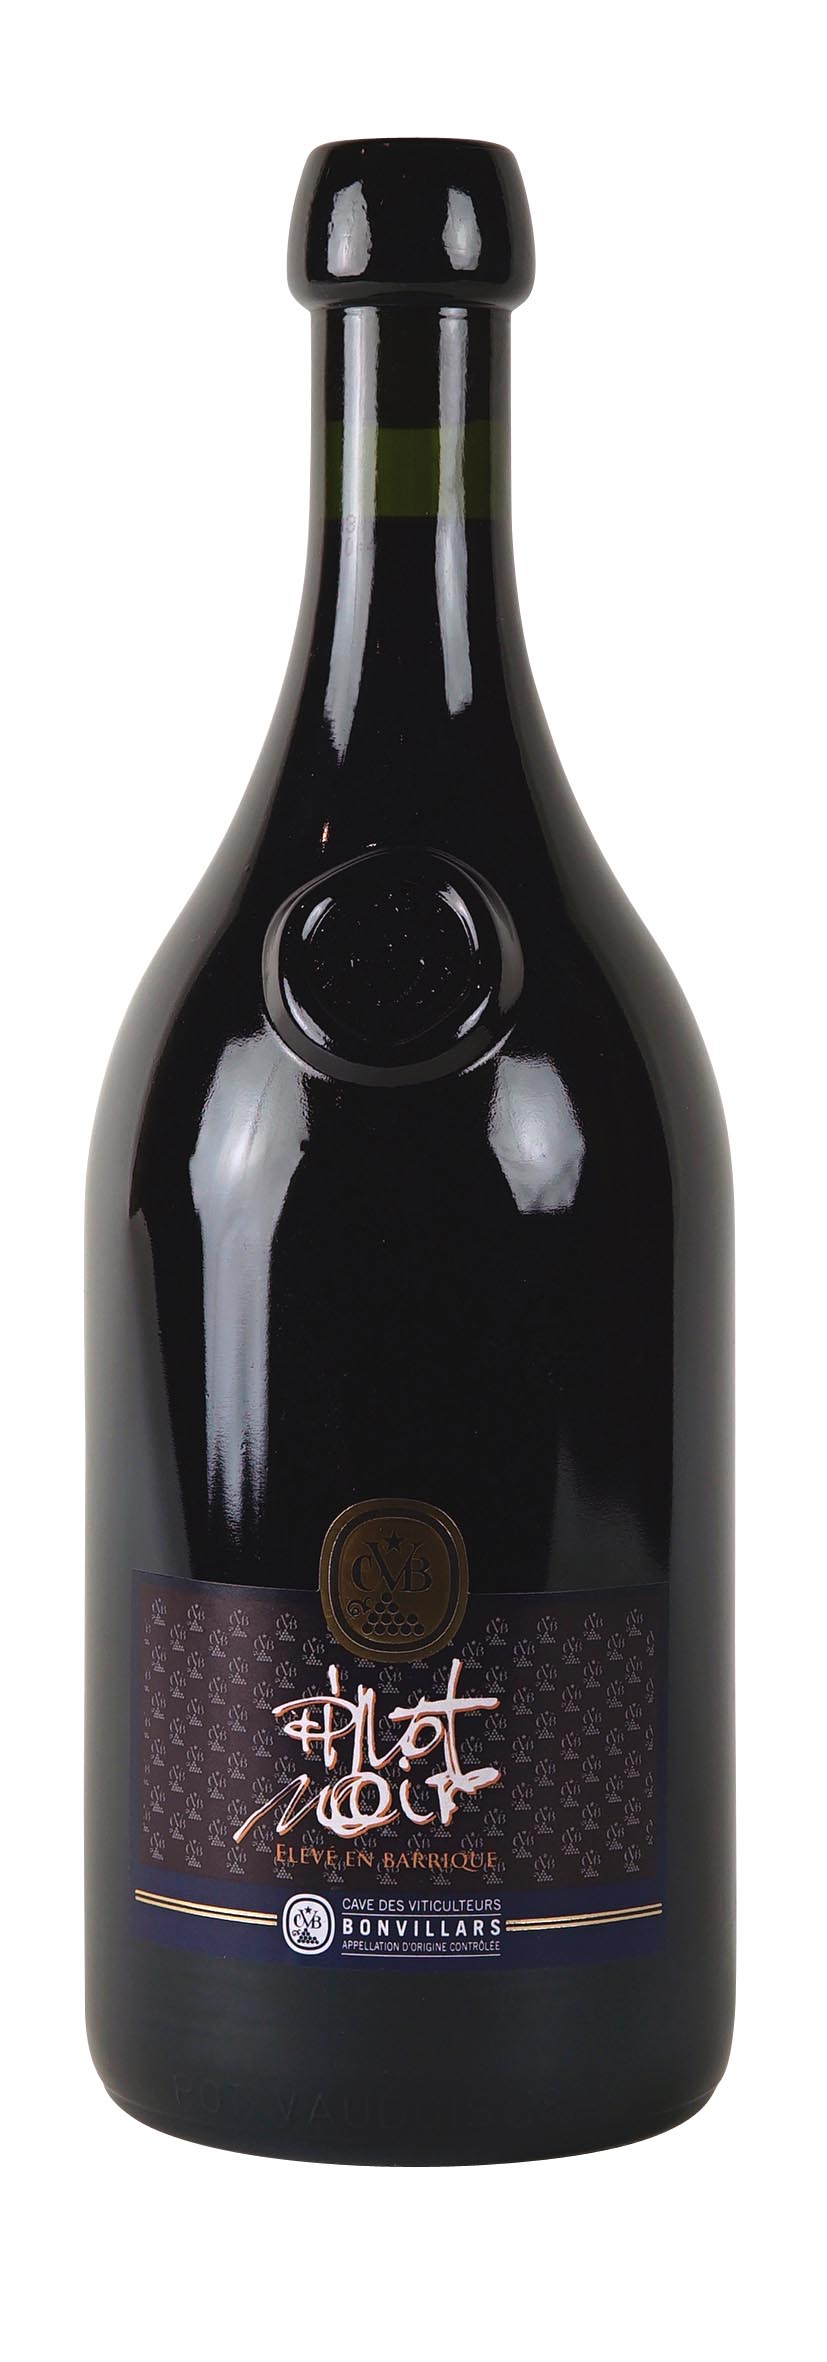 Vaud AOC Pinot Noir (Magnum) 2016